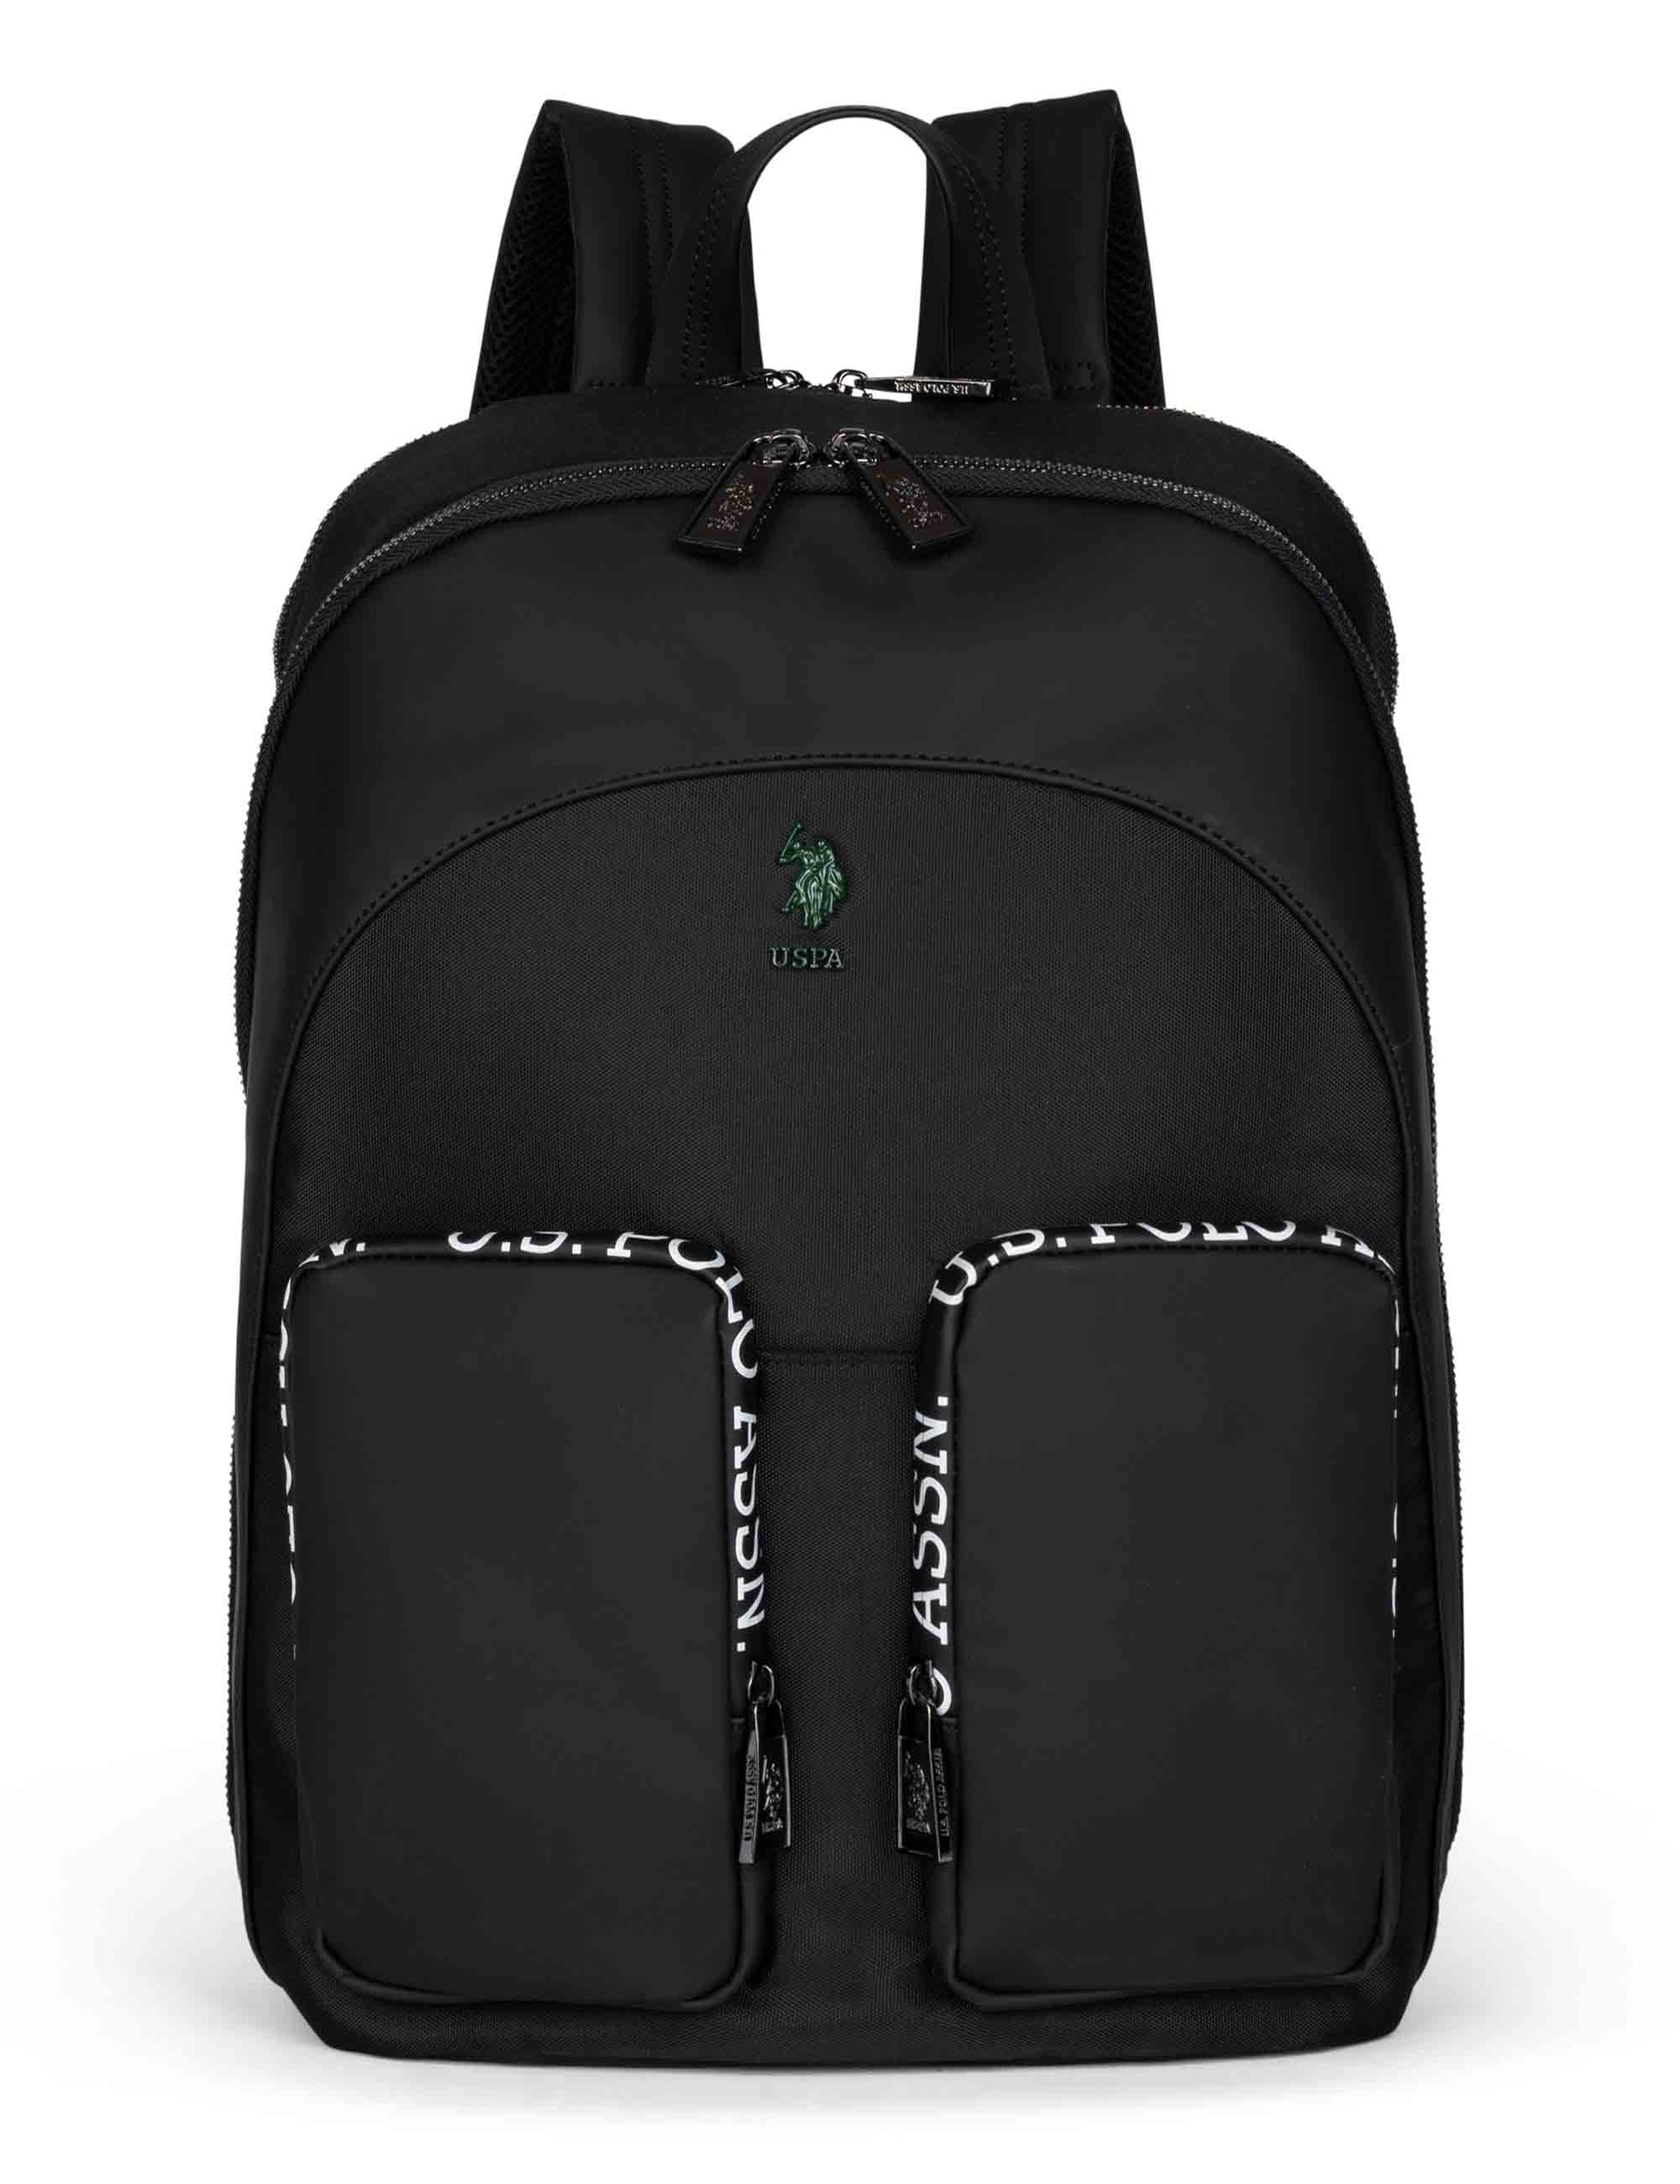 Oliver men's backpacks in black nylon